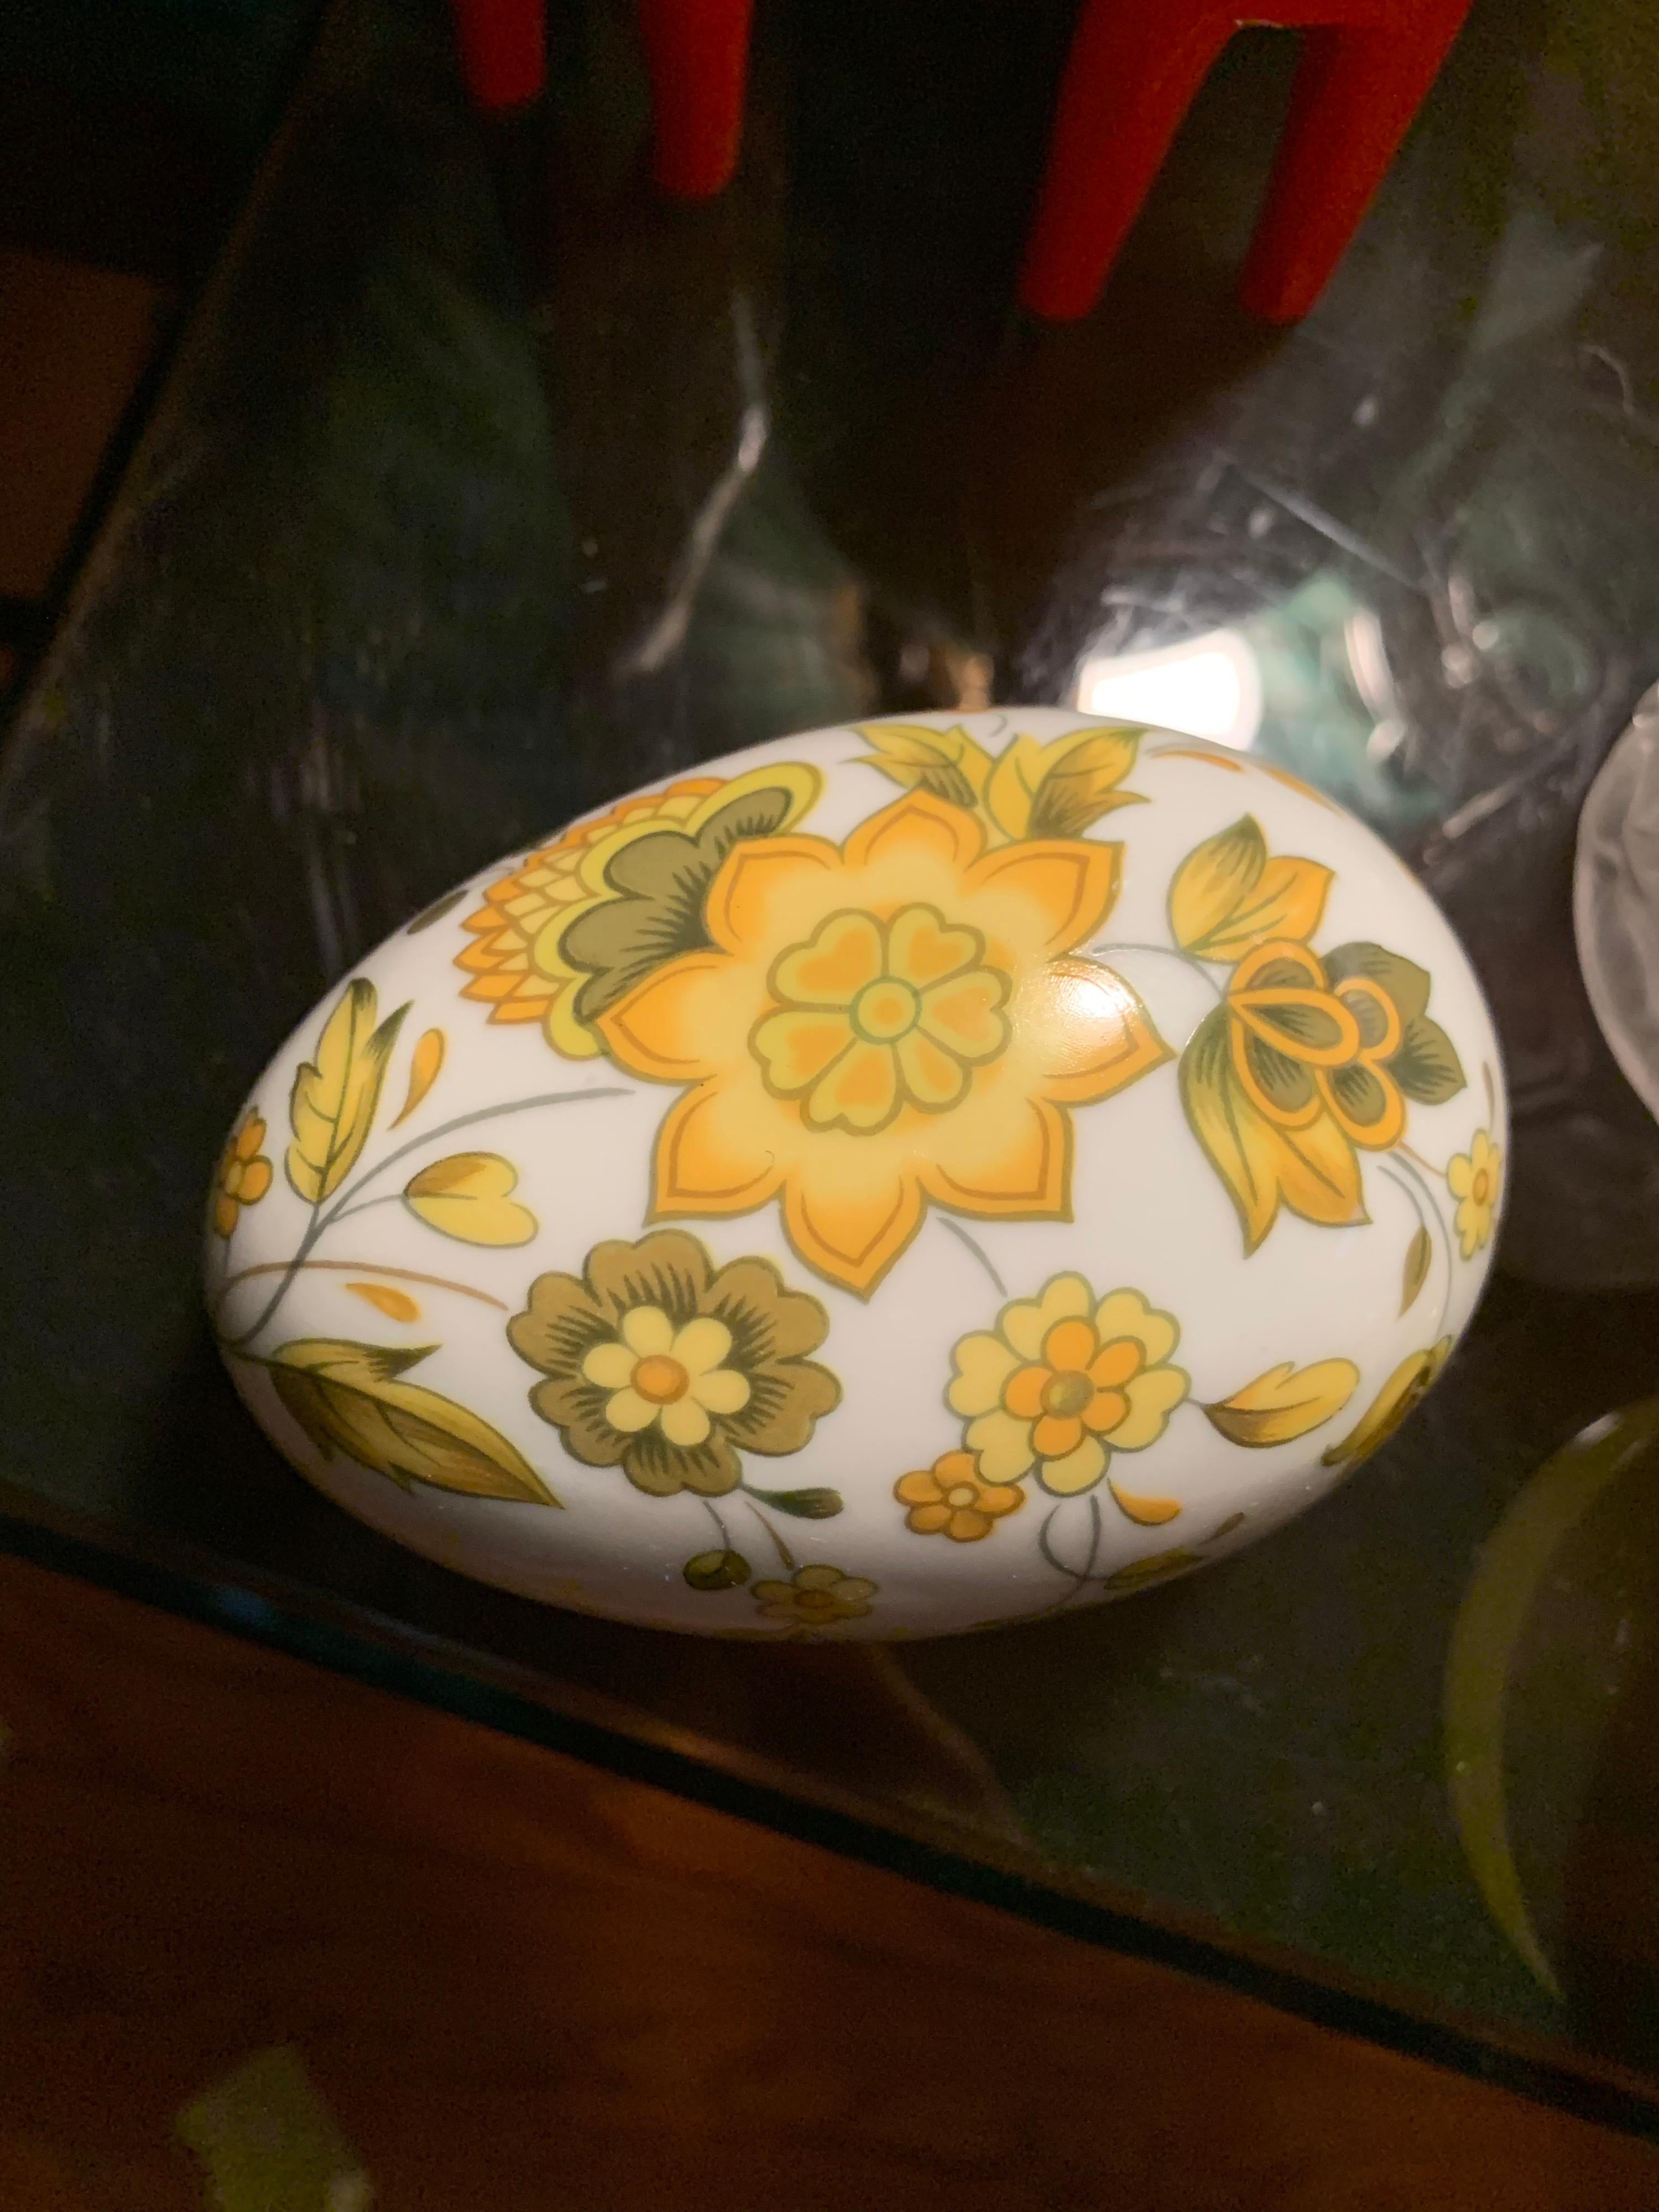 Vintage Limoges hand painted porcelain yellow floral egg trinket box, France. Midcentury. Marked.